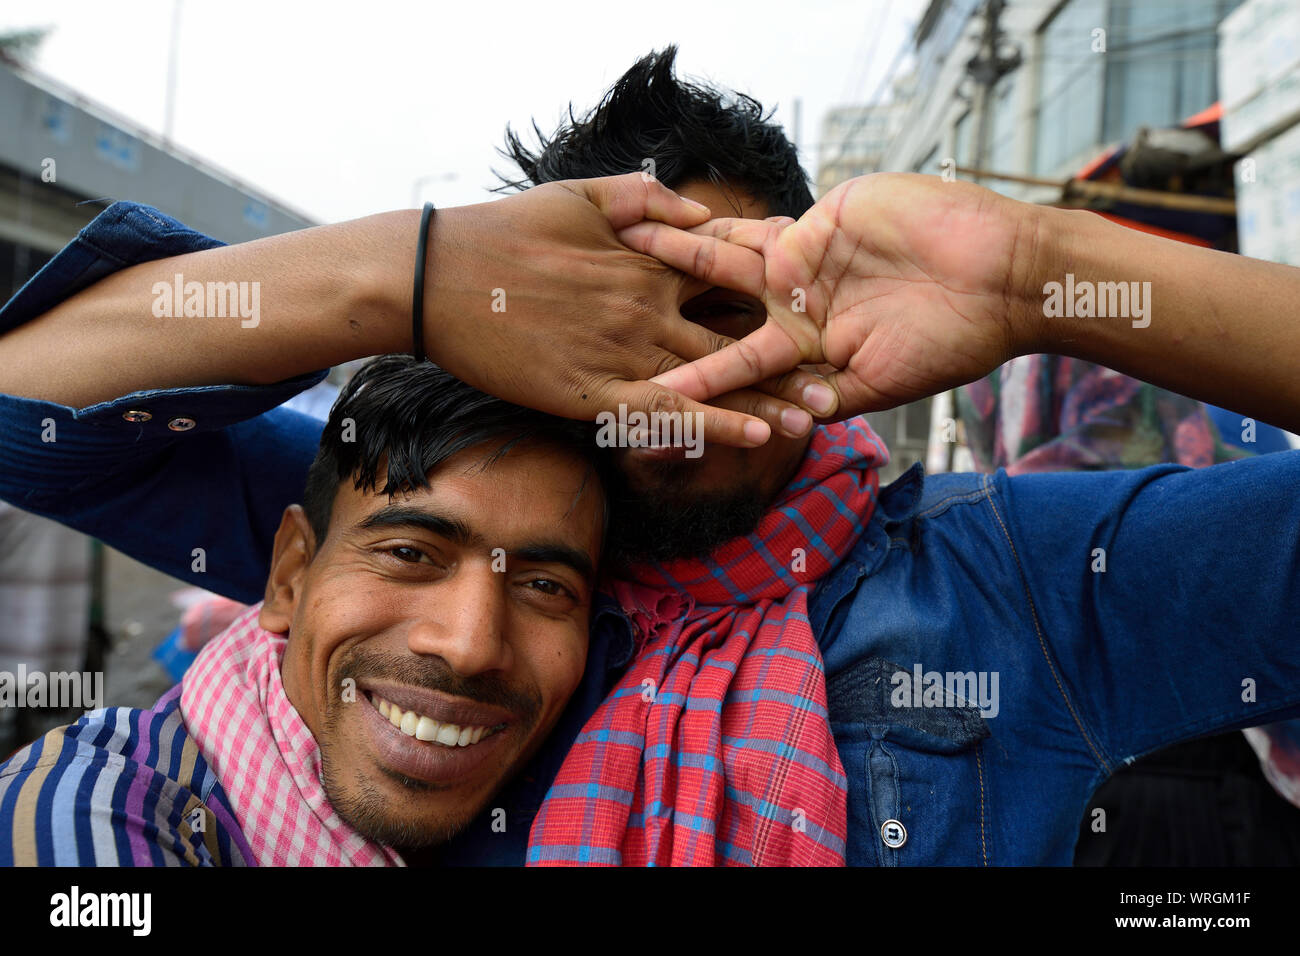 DHAKA, BENGAL BANGLADESH - 26 JANUARY 2019: Two young friends hugging in the street in Bangladesh Stock Photo